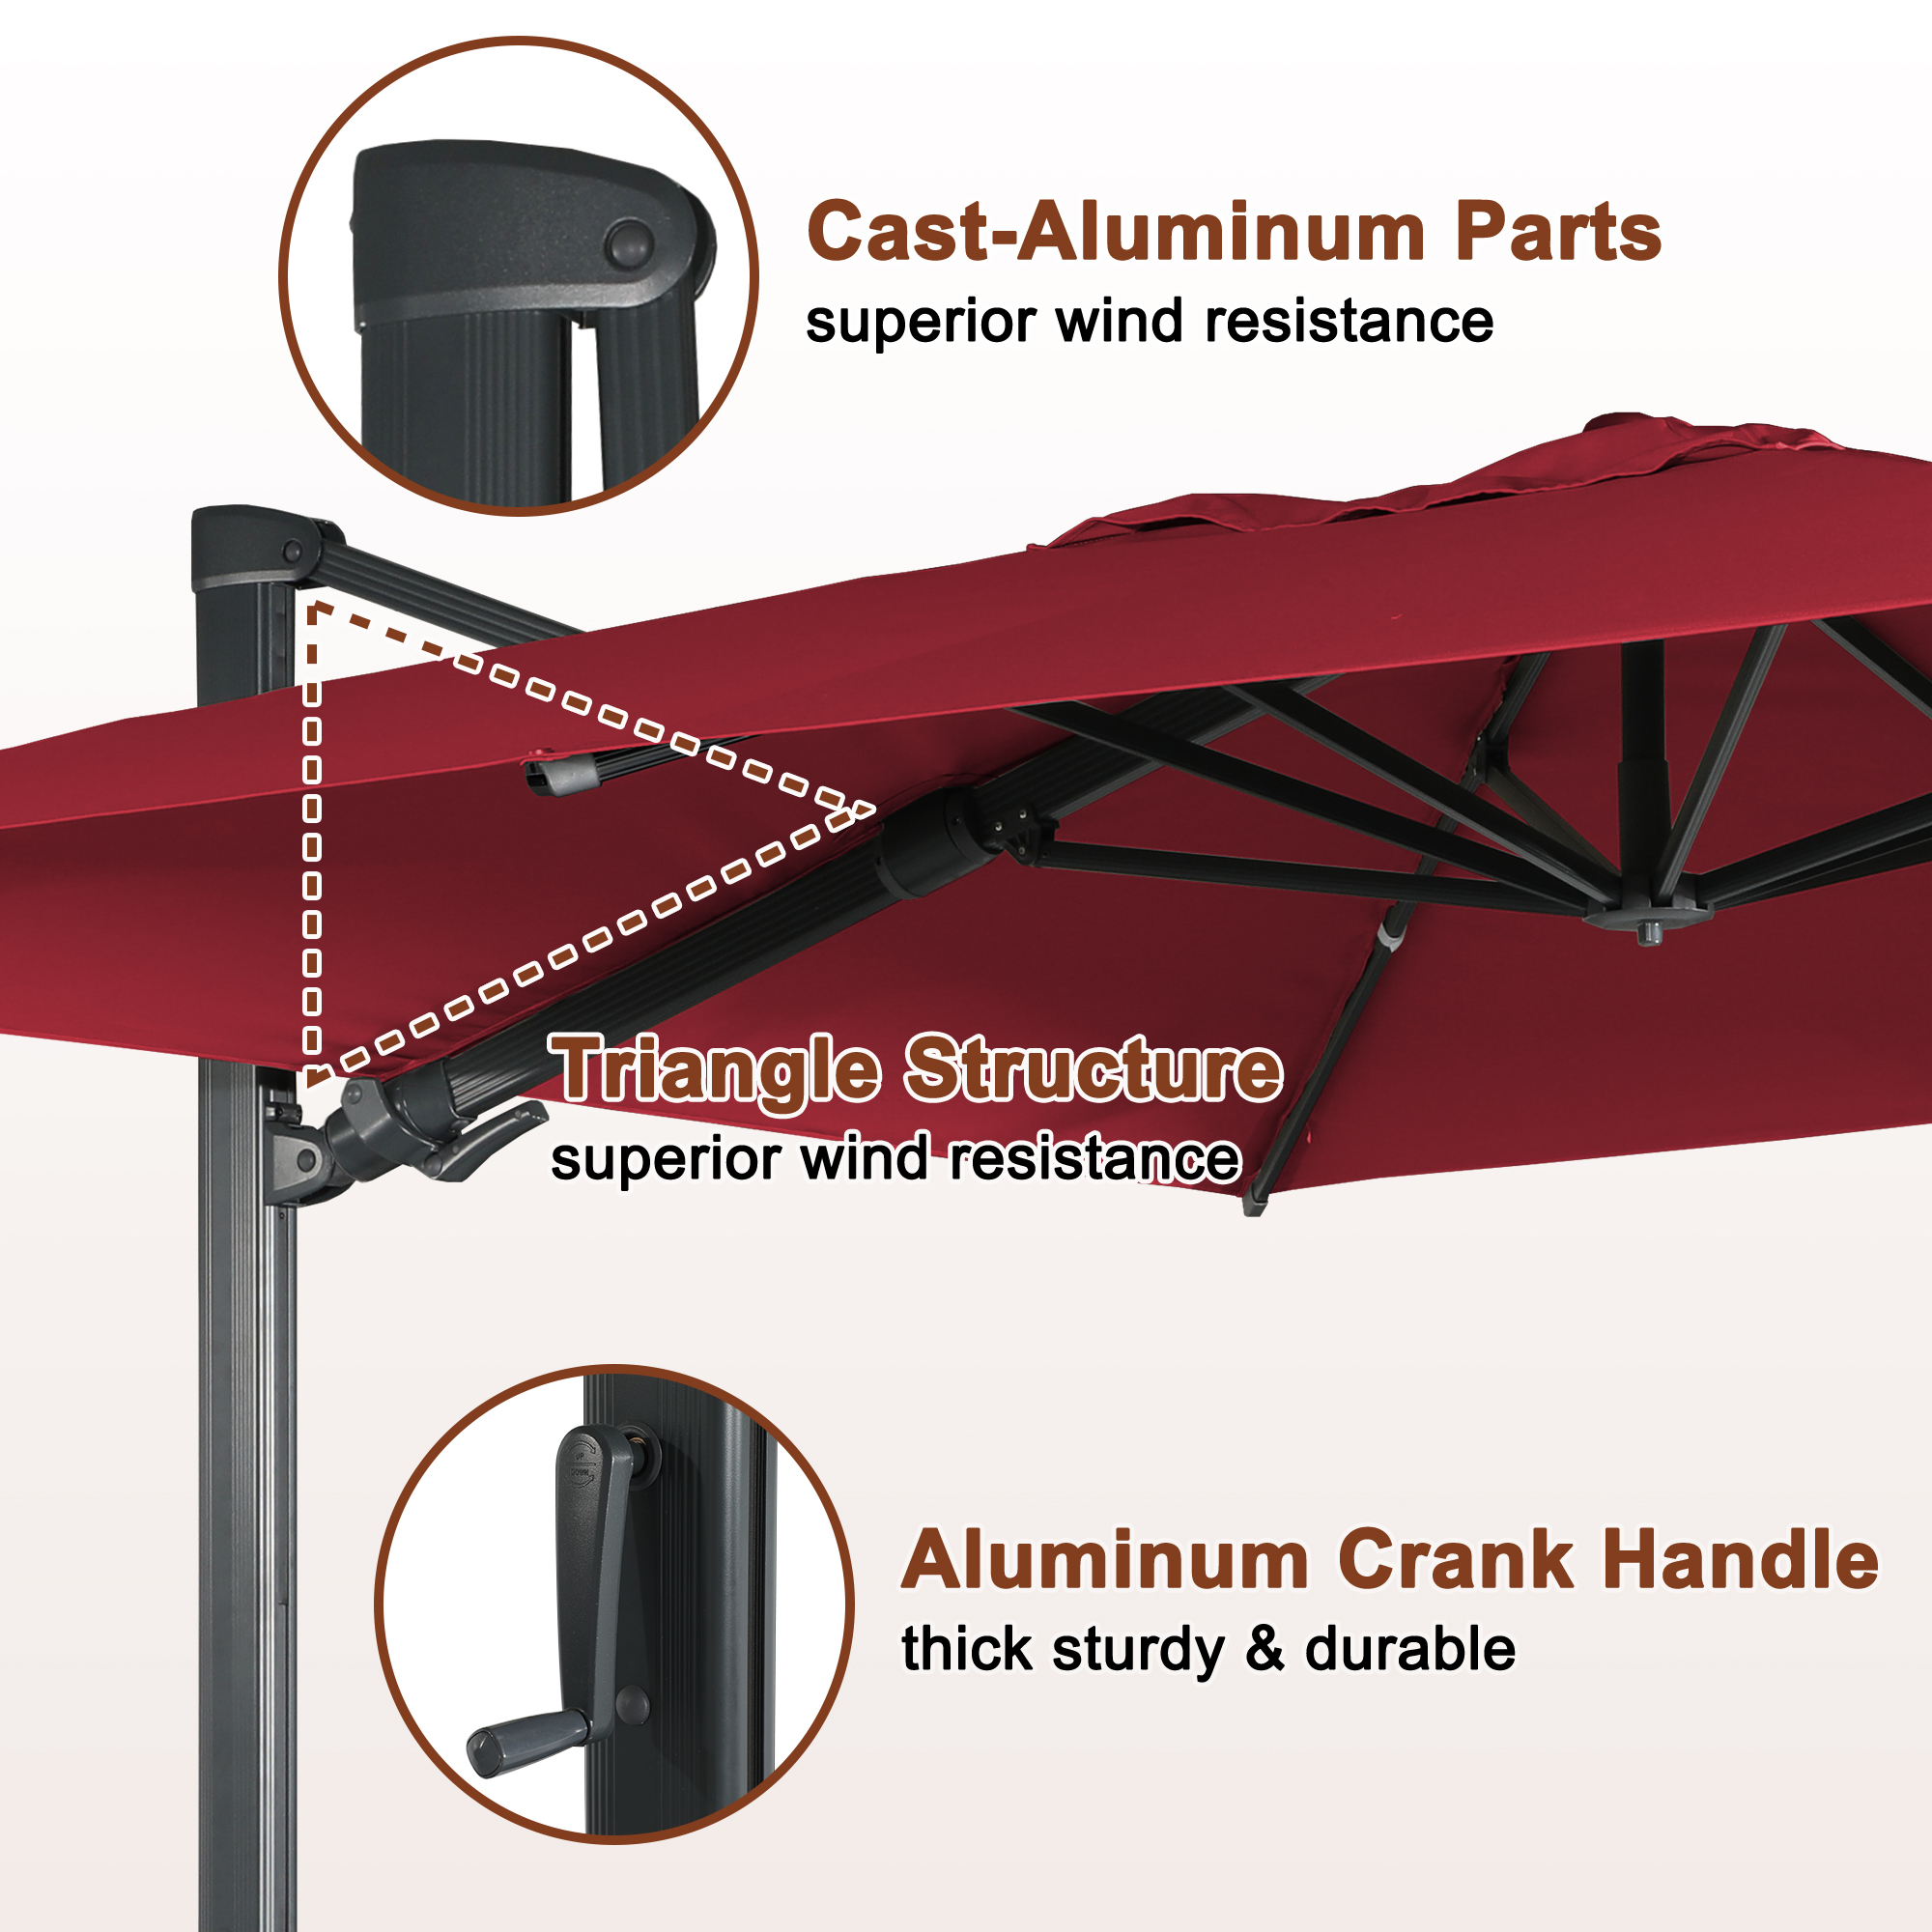 Mondawe 10ft Square Bluetooth Ambient Light 360-Degree Tilt Outdoor Patio Umbrella-Mondawe